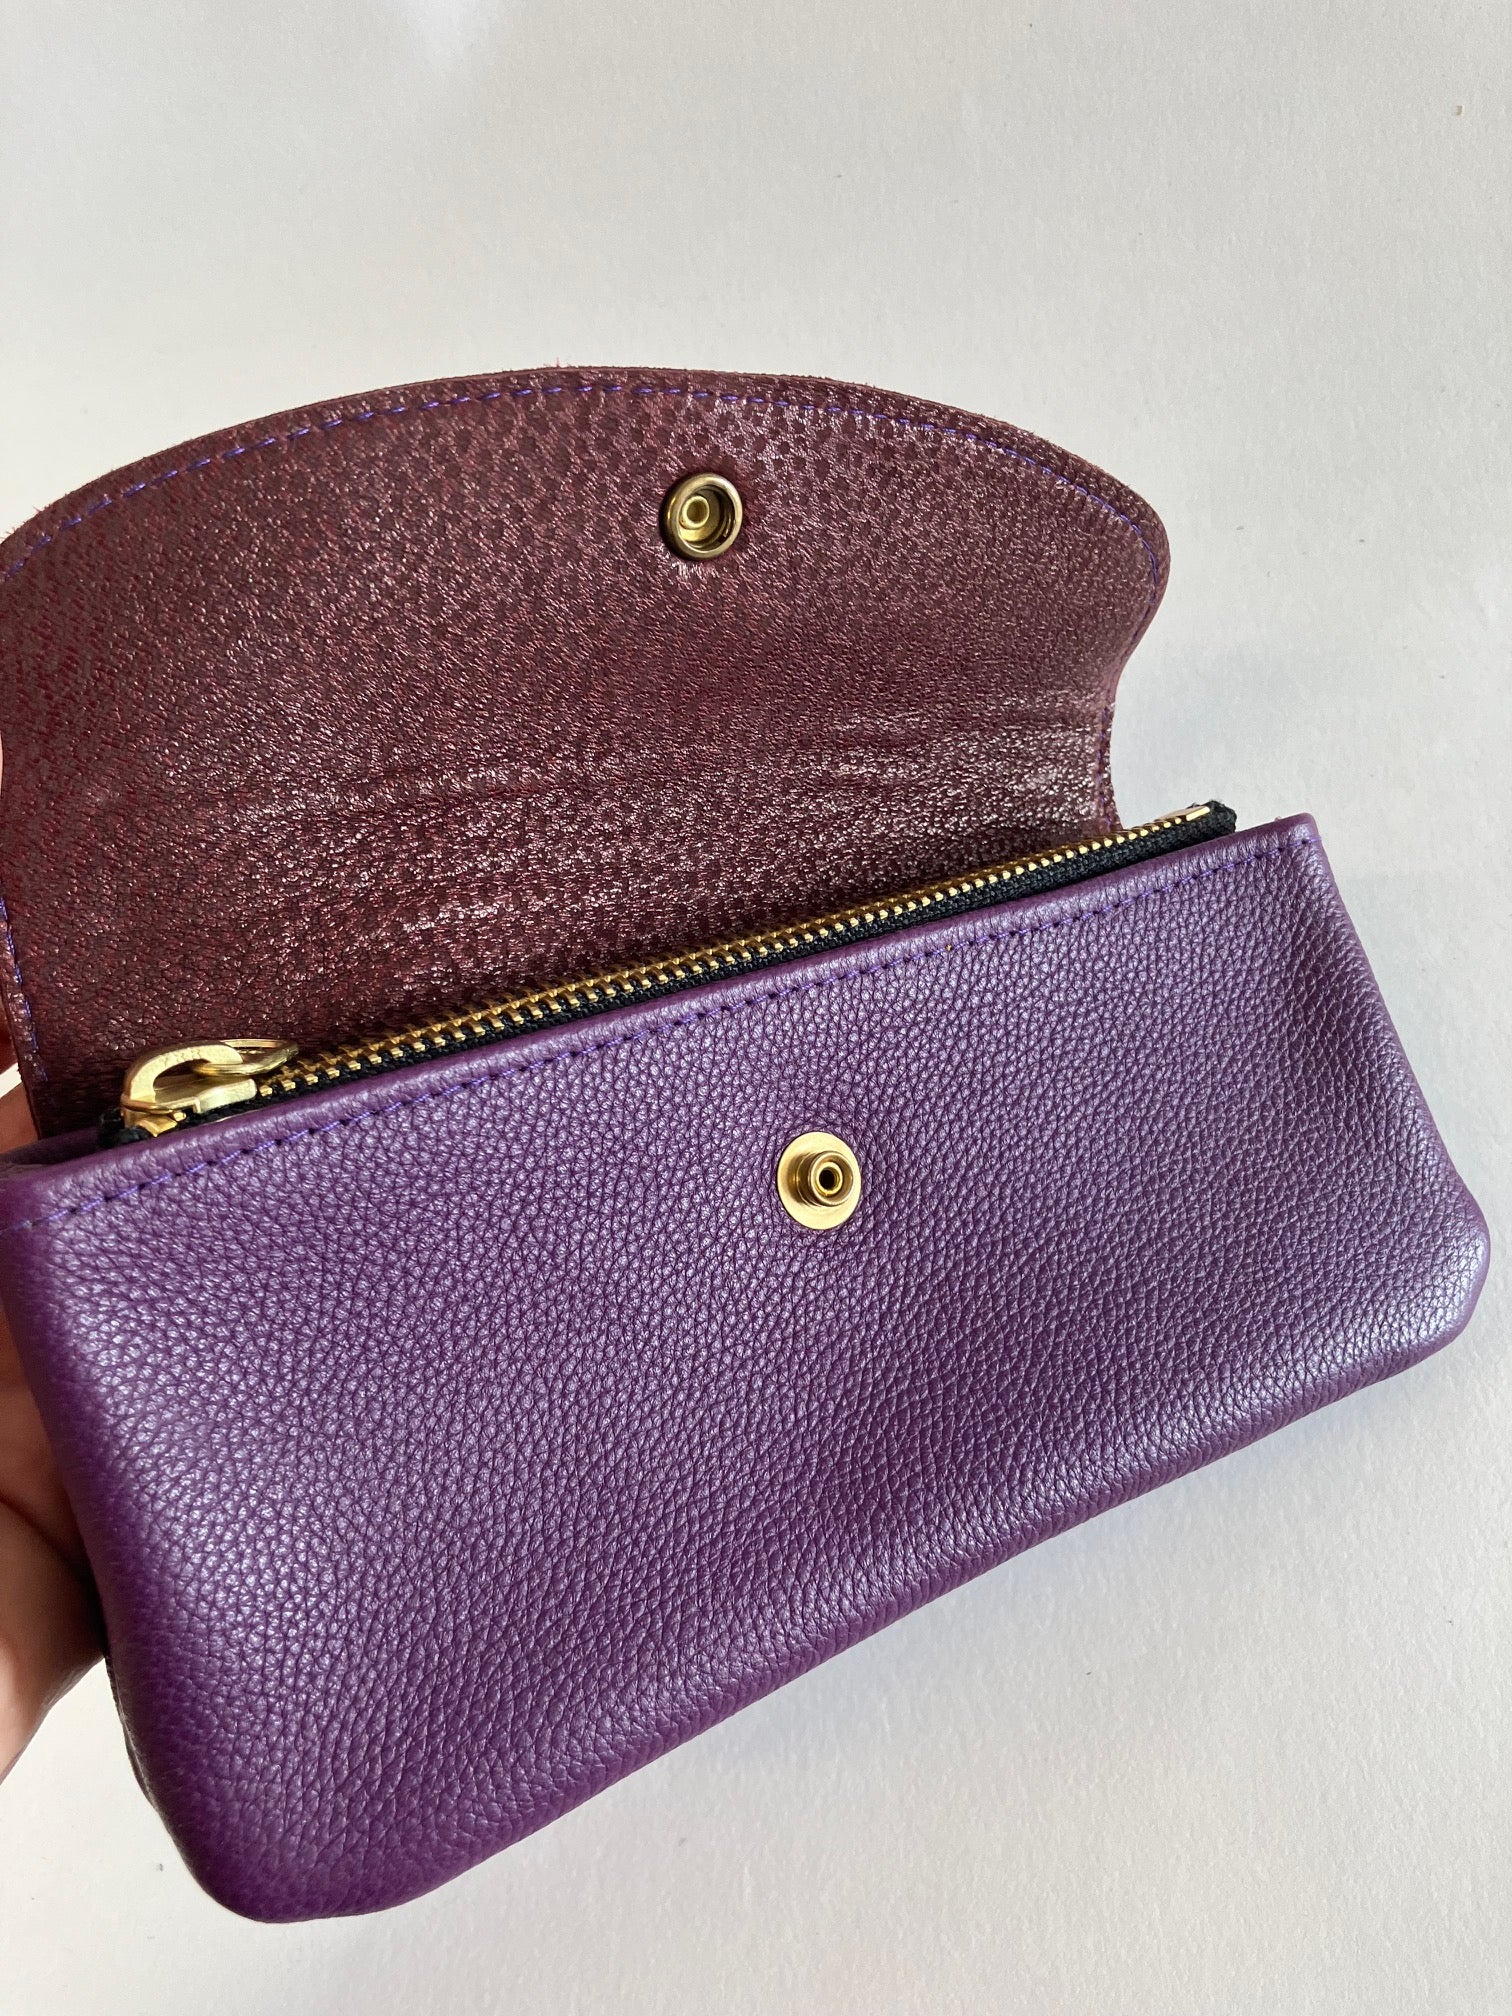 SAMPLE neon pink and purple Minimalist leather wallet